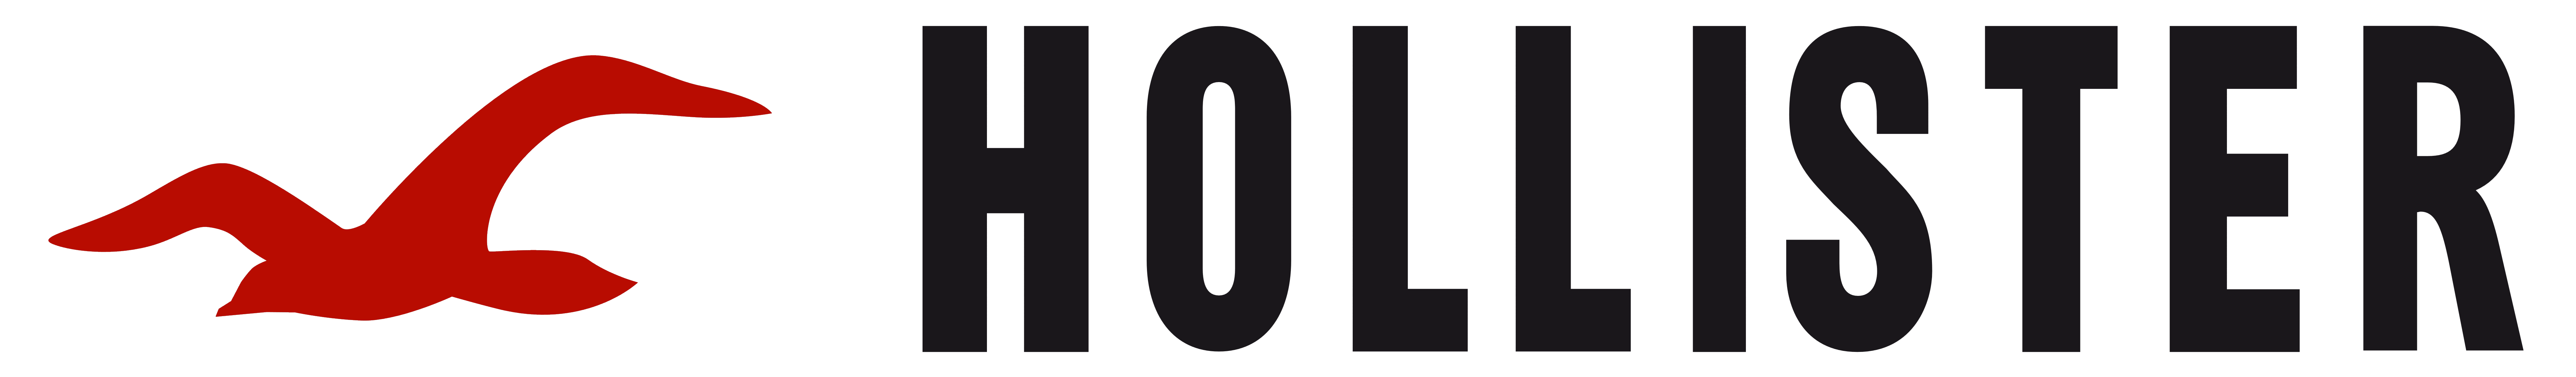 Hollister – Logos Download